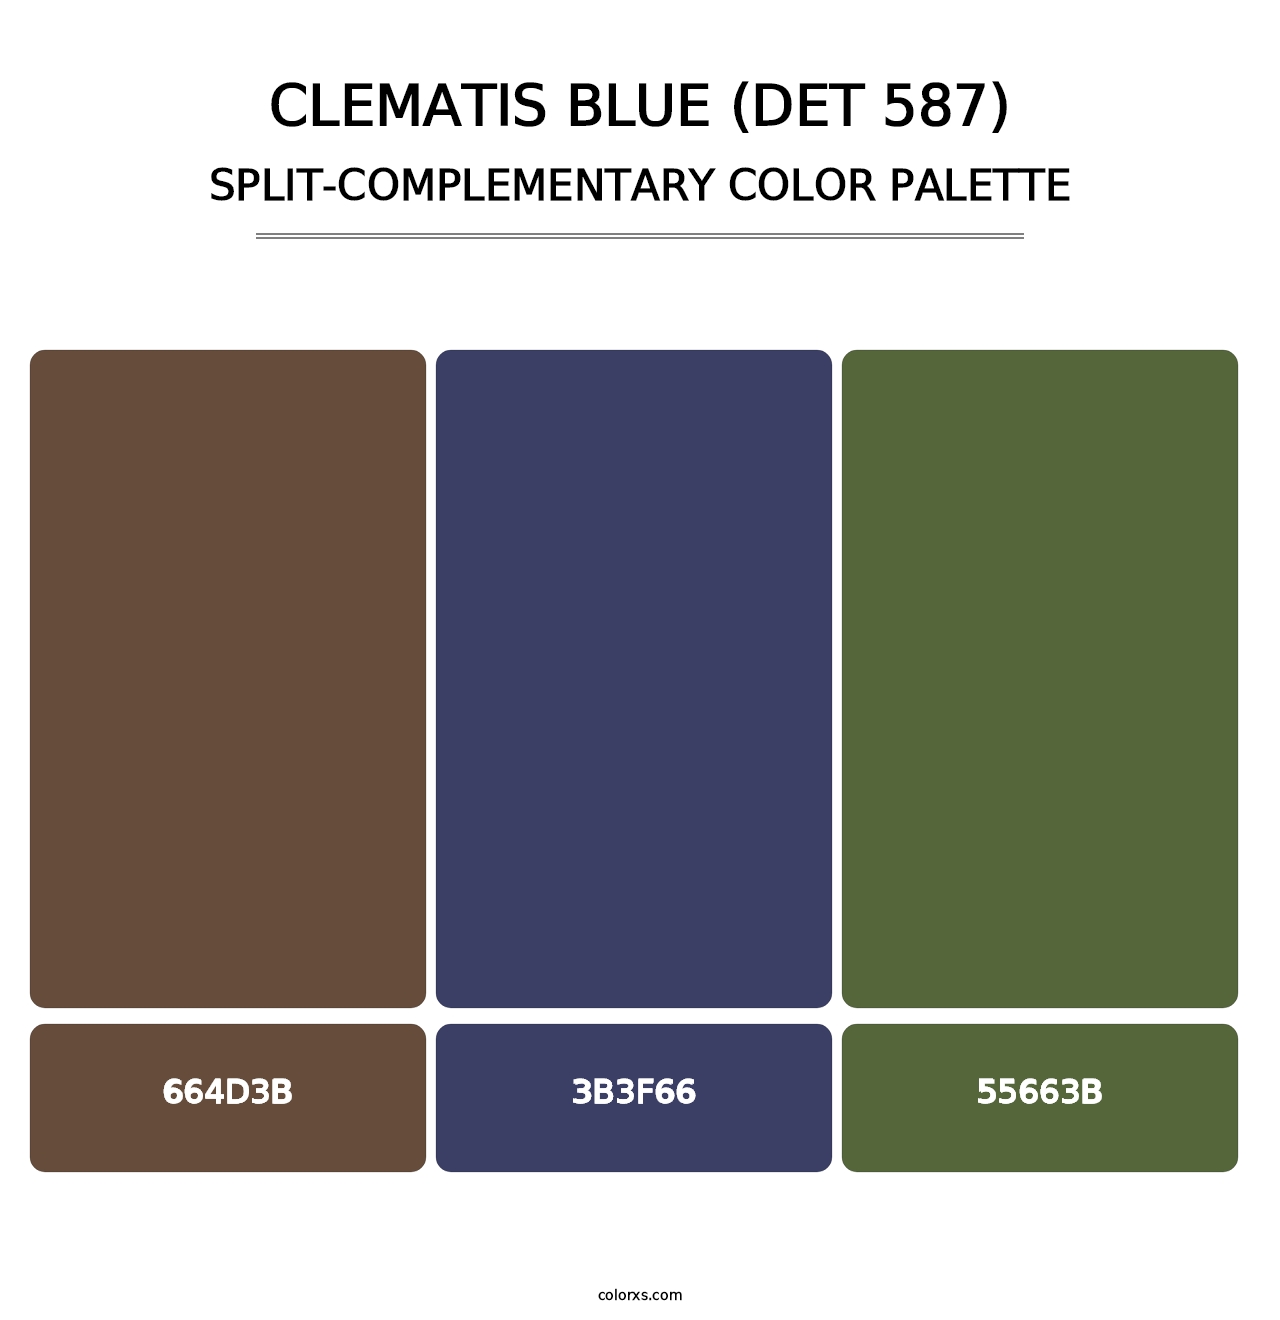 Clematis Blue (DET 587) - Split-Complementary Color Palette